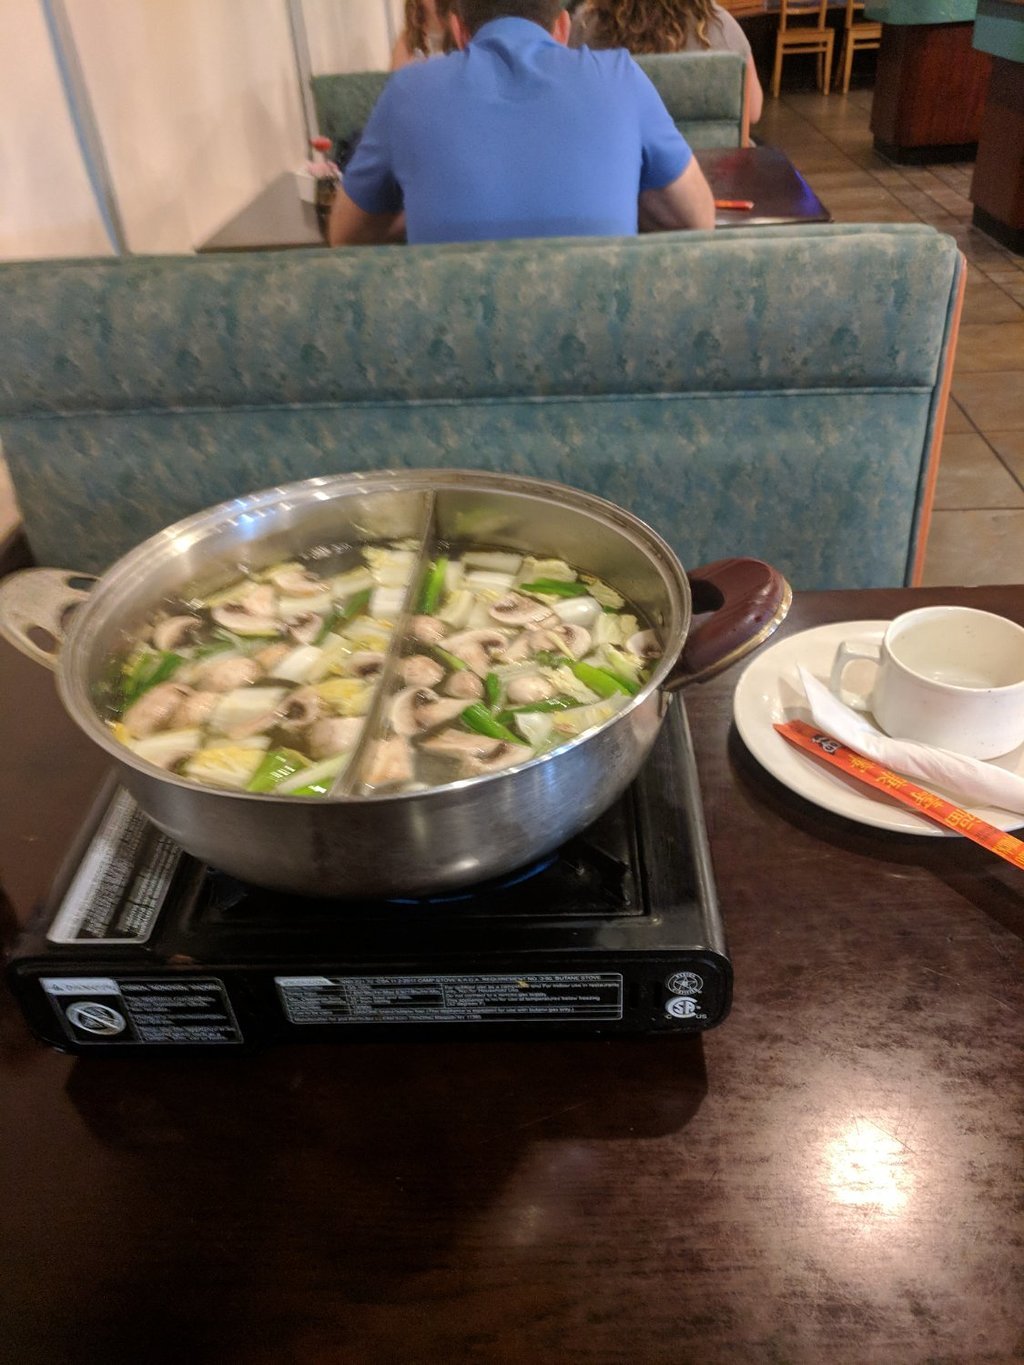 Orlando Asian Restaurant